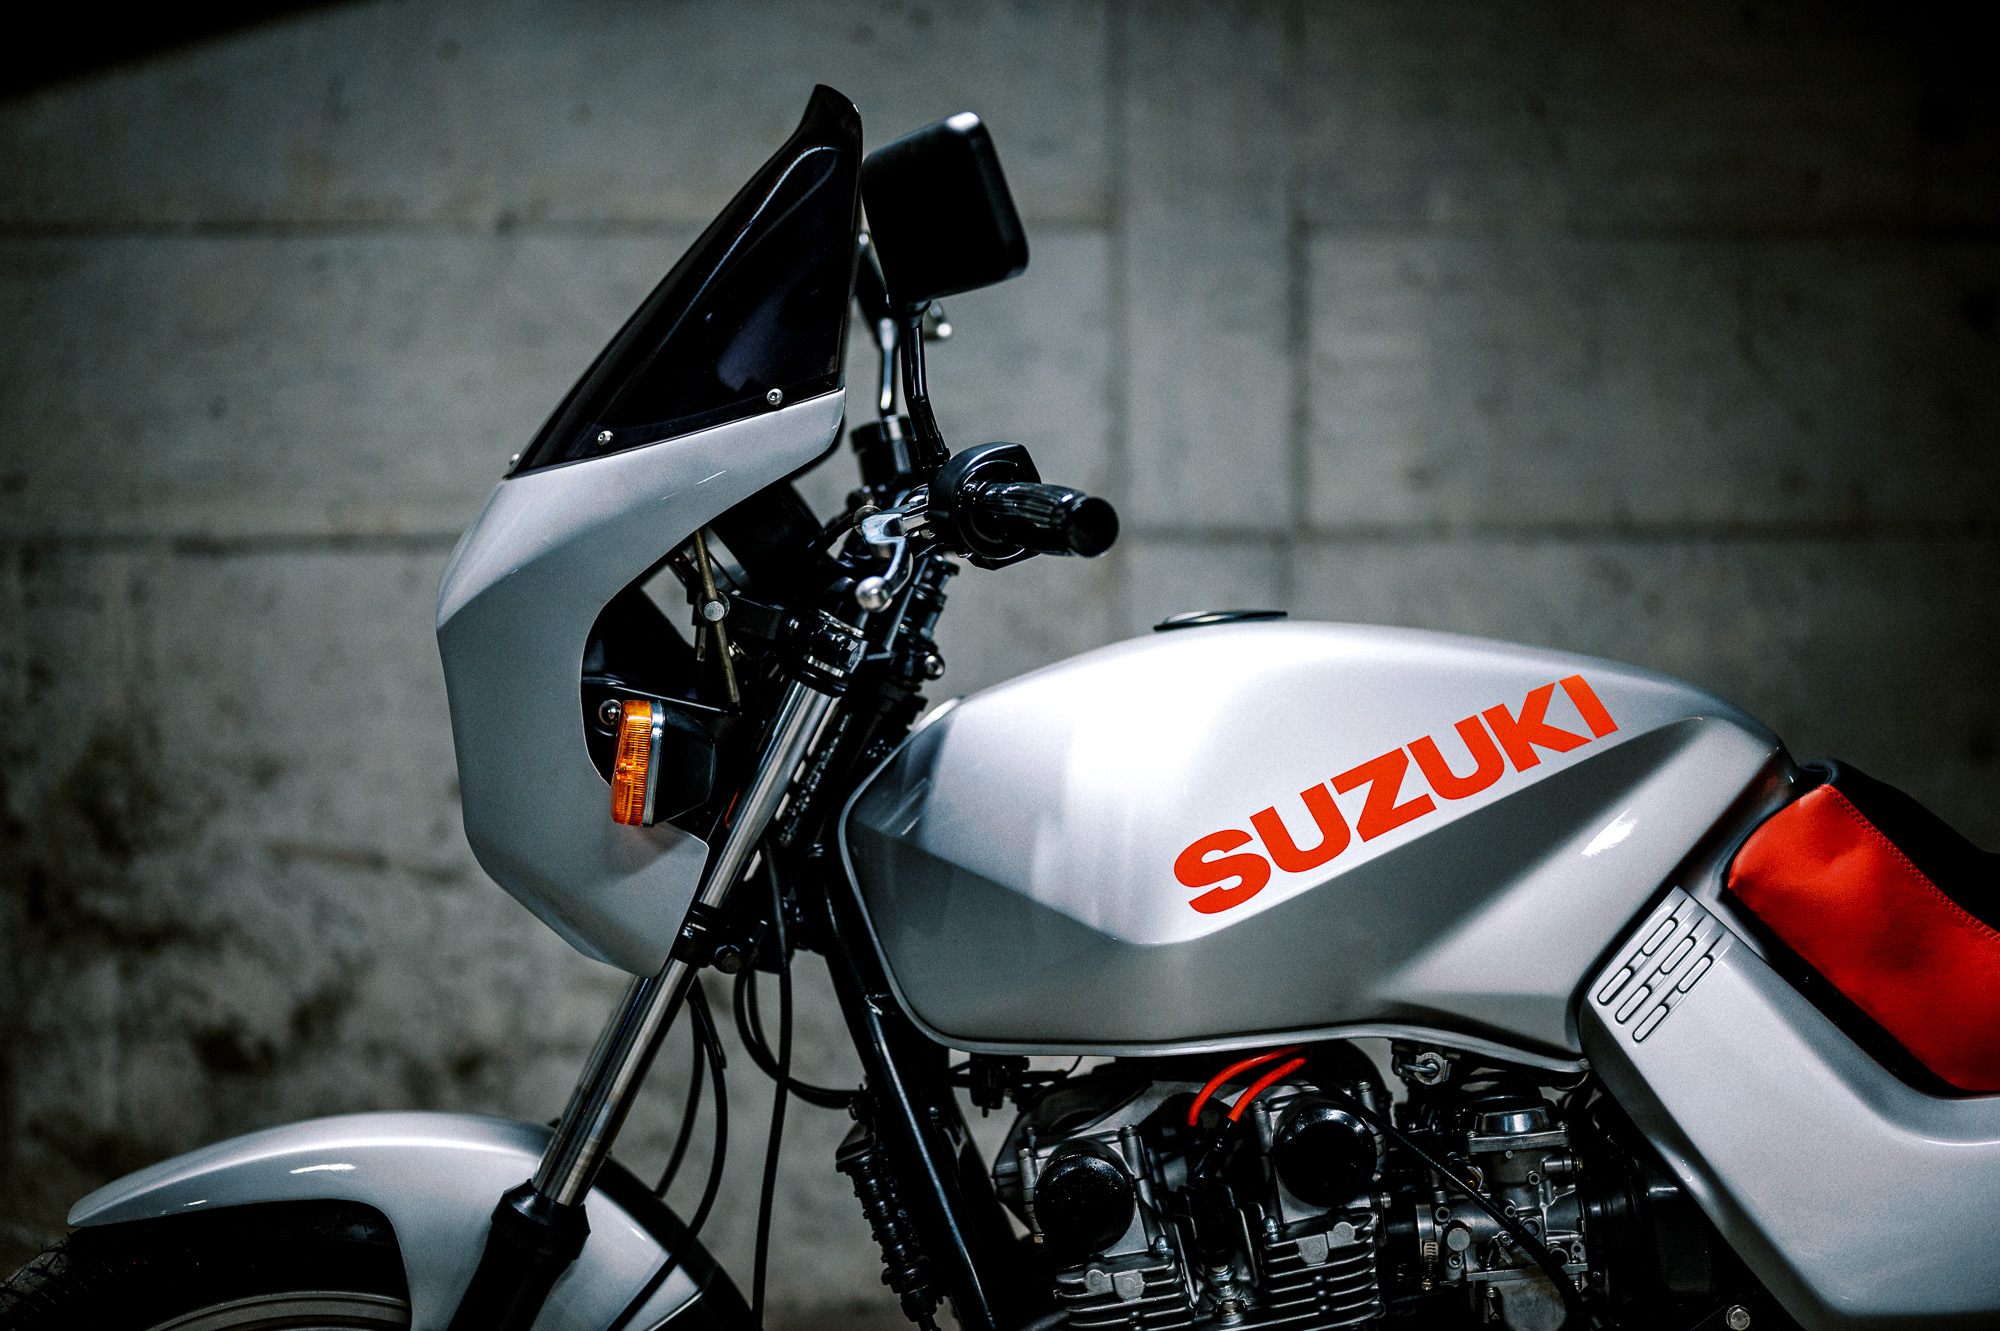 A 1981 Suzuki Katana Motorcycle in an underground carpark